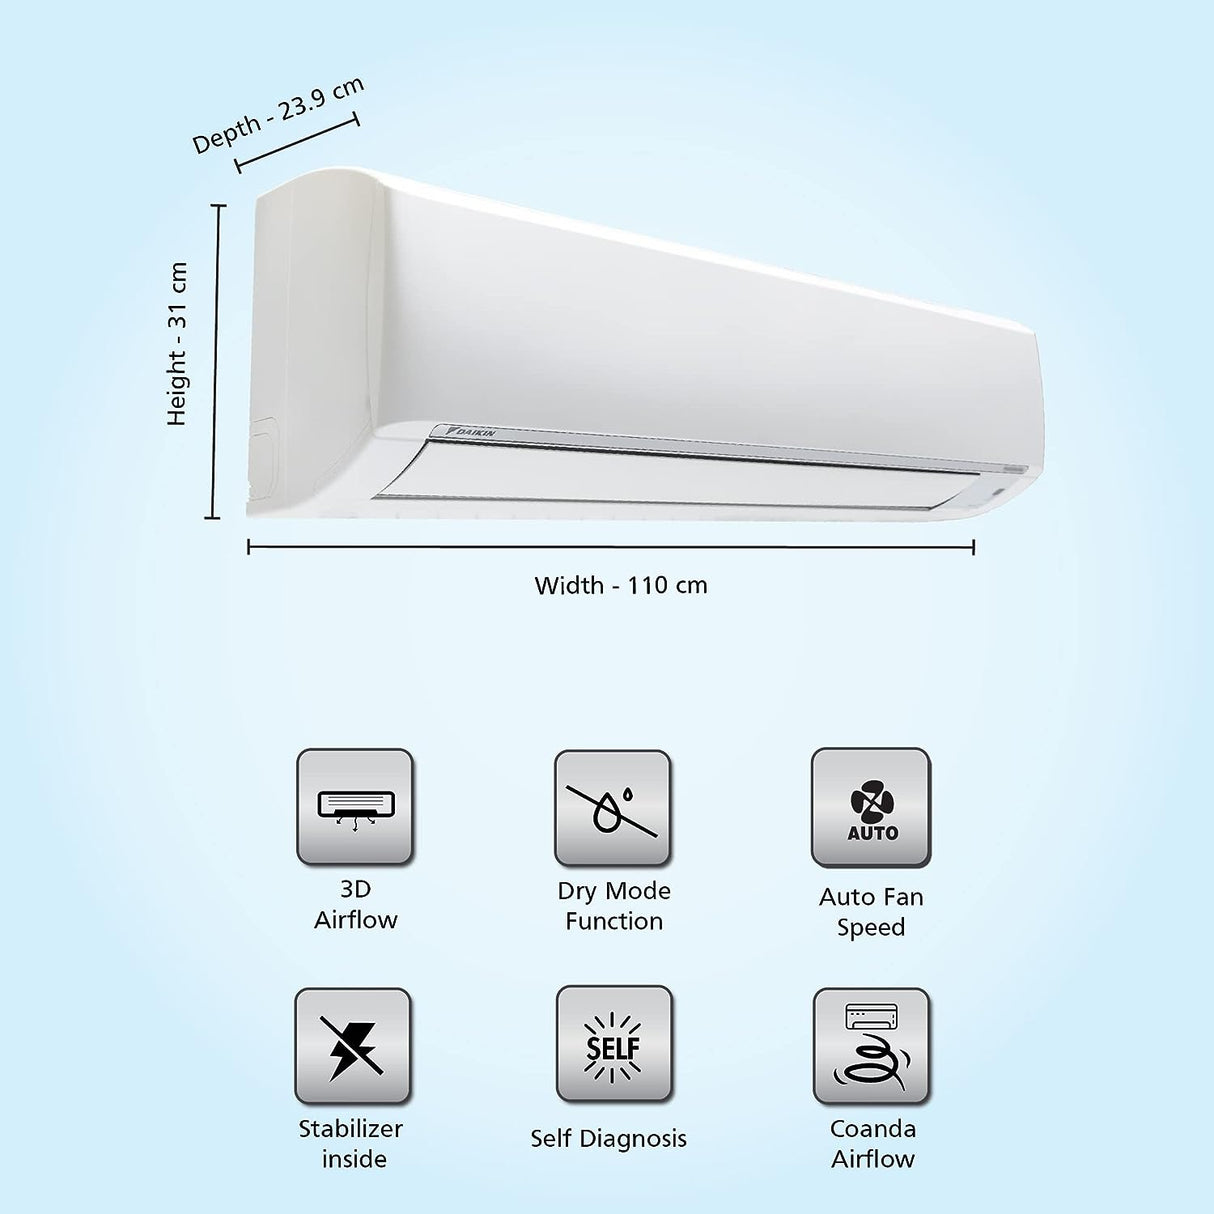 Best HVAC: Daikin 2.02T 3 Star Inverter Split AC - Copper, PM 2.5 Filter, White.